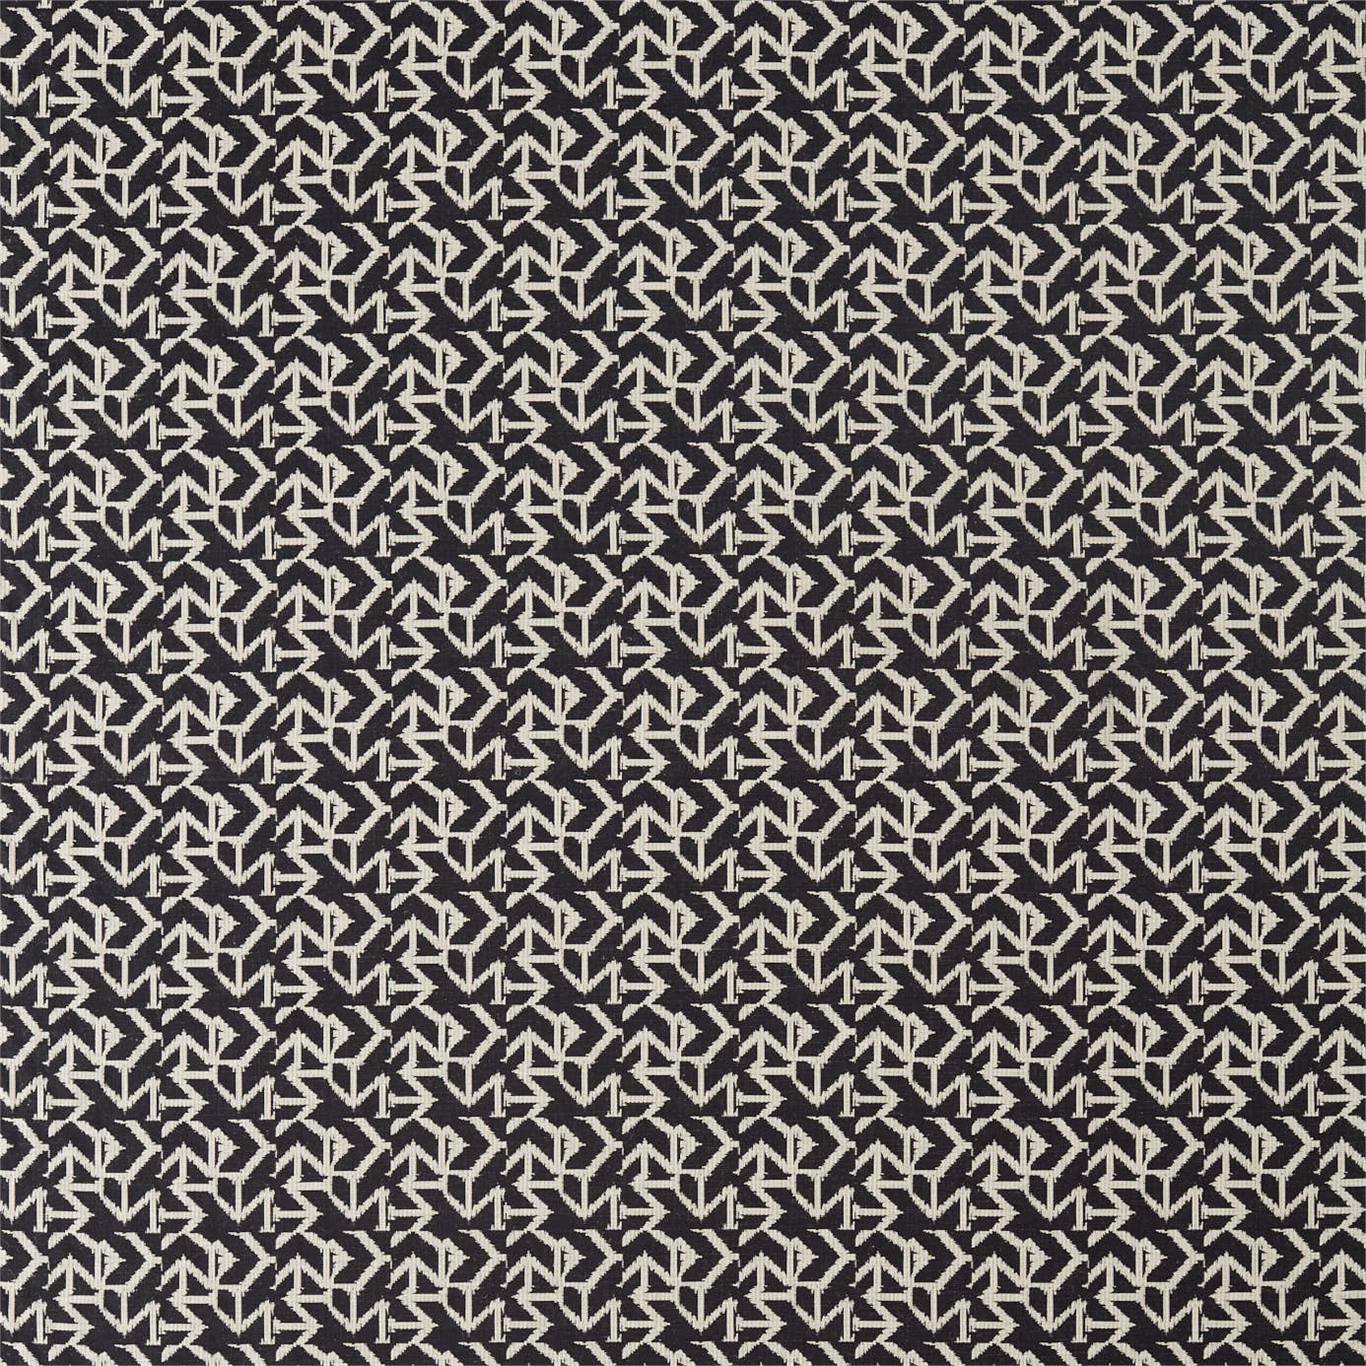 Moremi Zebra Fabric by HAR